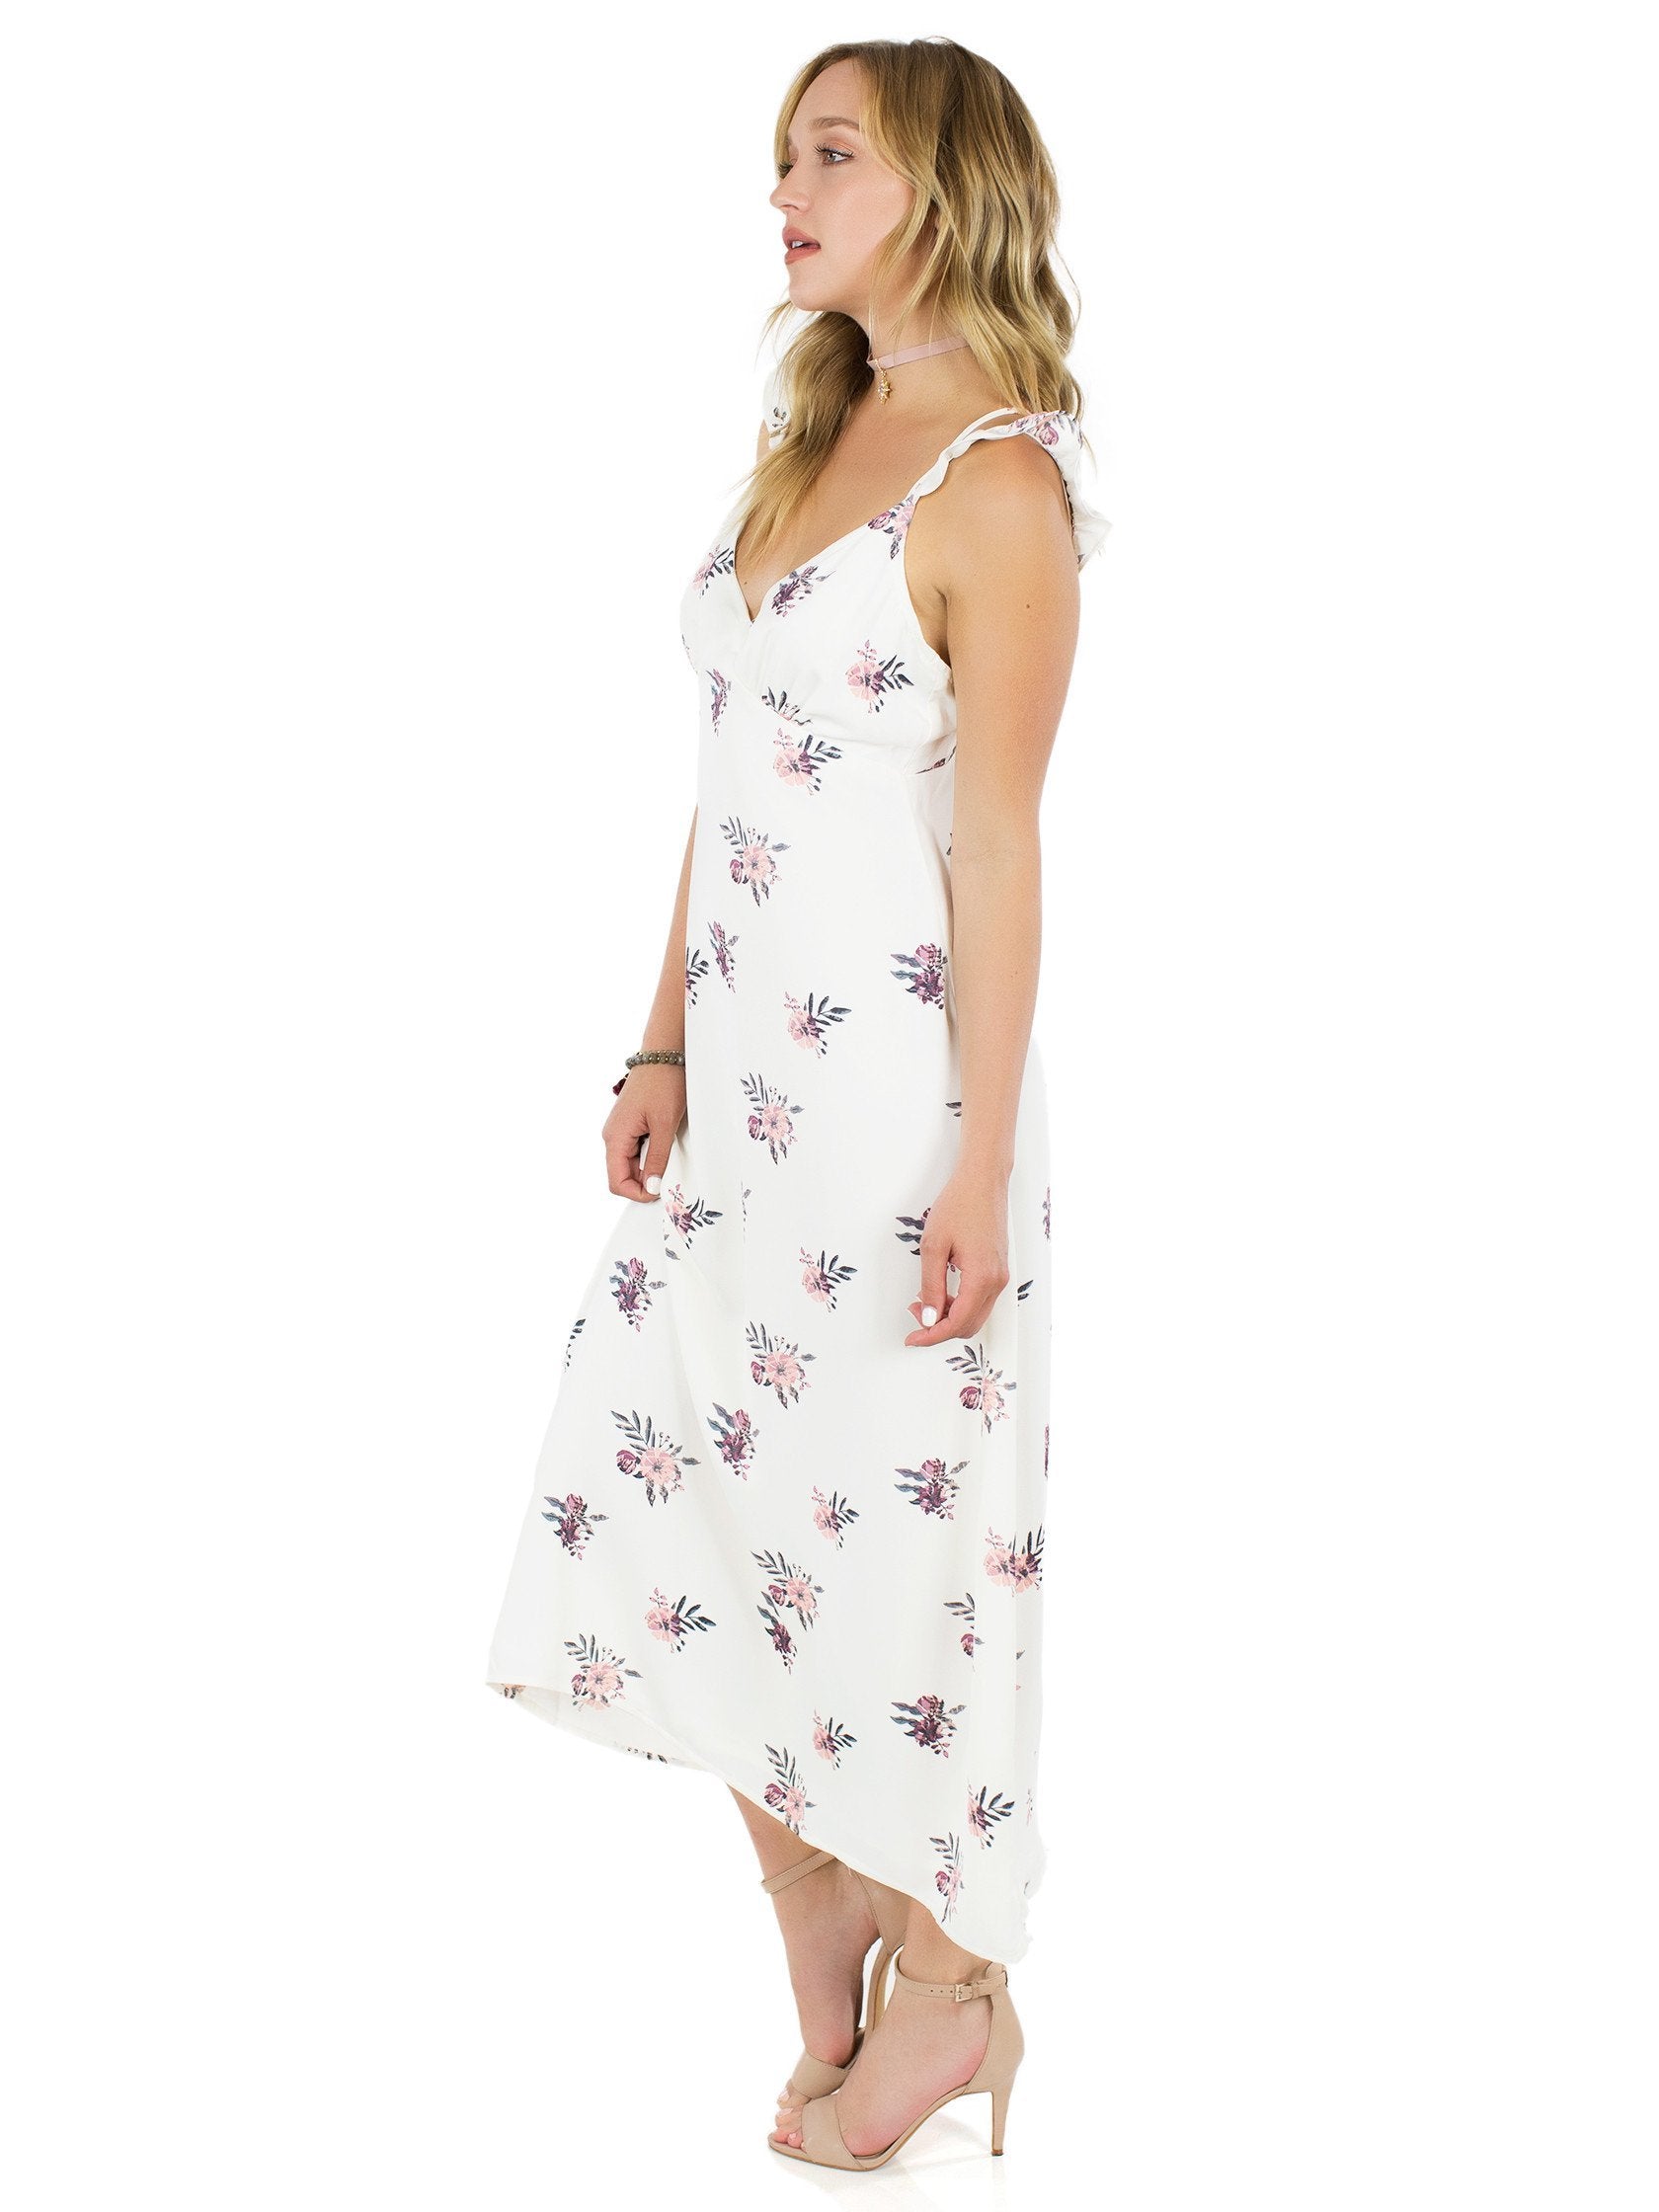 Woman wearing a dress rental from FashionPass called Spring Fling Dress